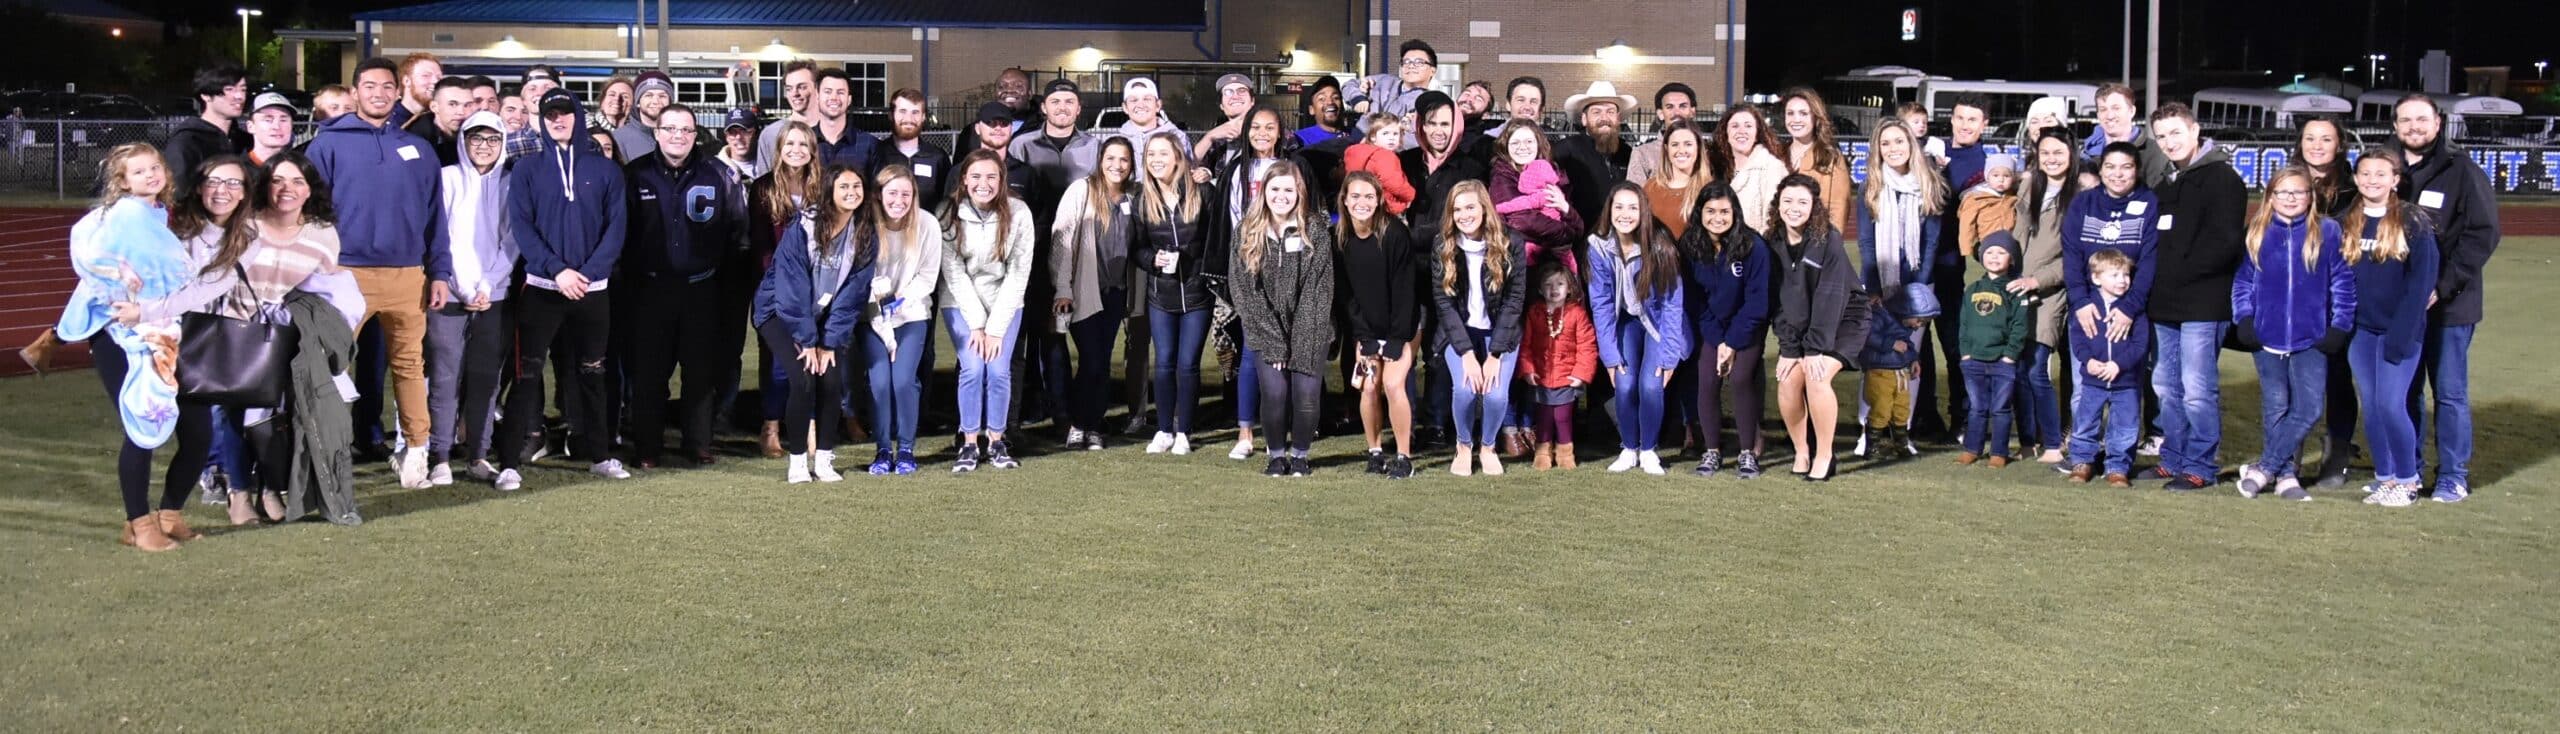 Halftime_Alumni_Photo_Homecoming_2019_Cropped